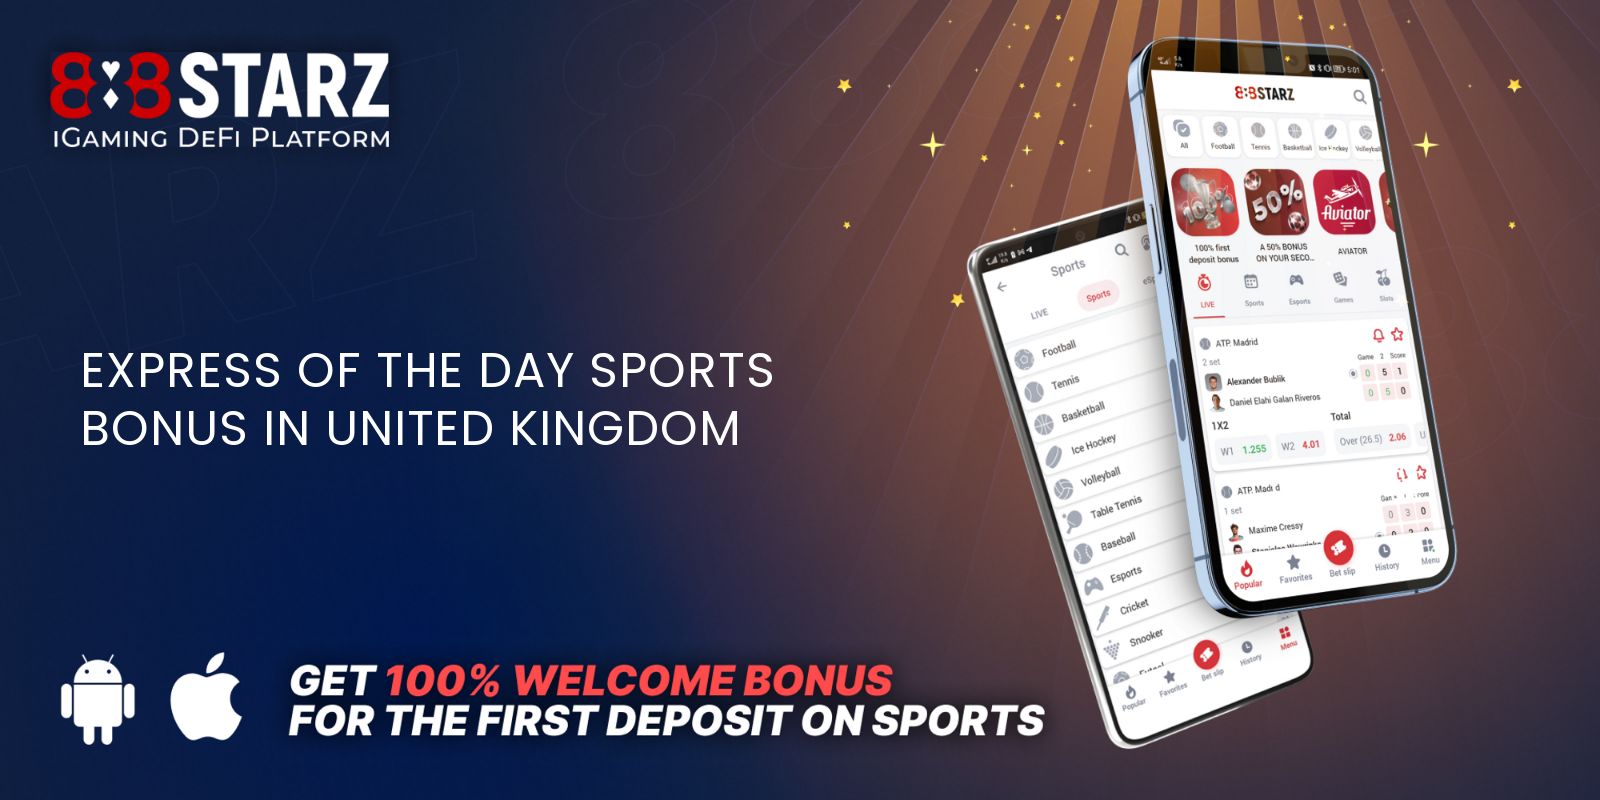 Express of the Day Sports Bonus in United Kingdom